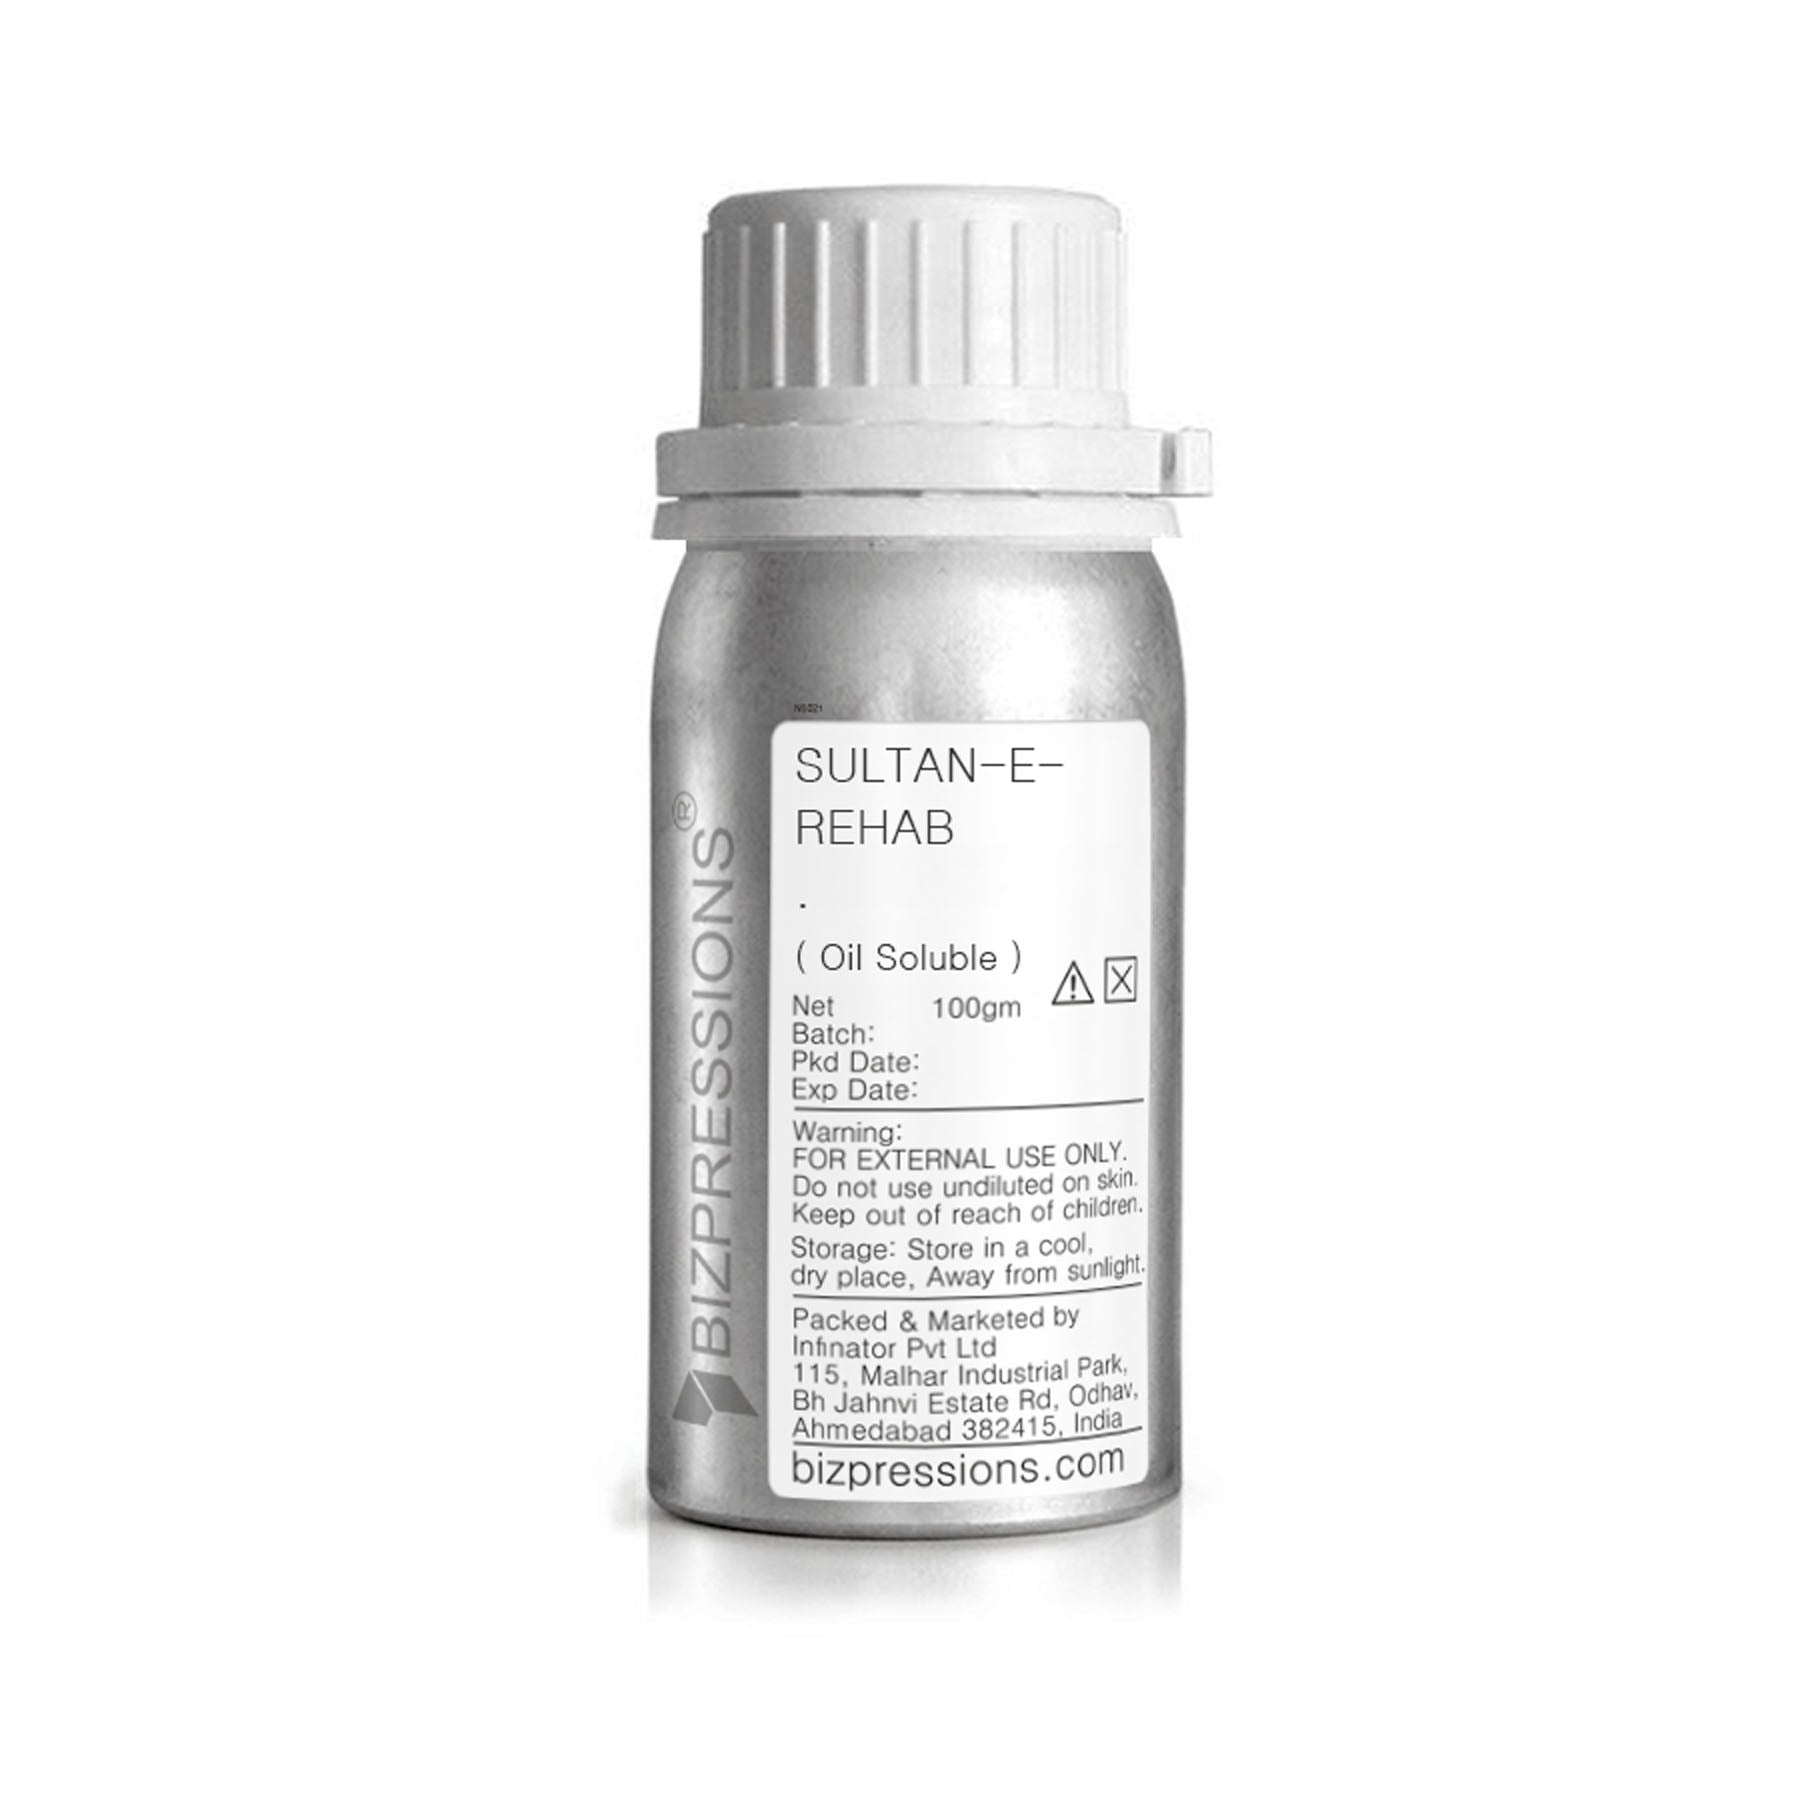 SULTAN-E-REHAB - Fragrance ( Oil Soluble ) - 100 gm